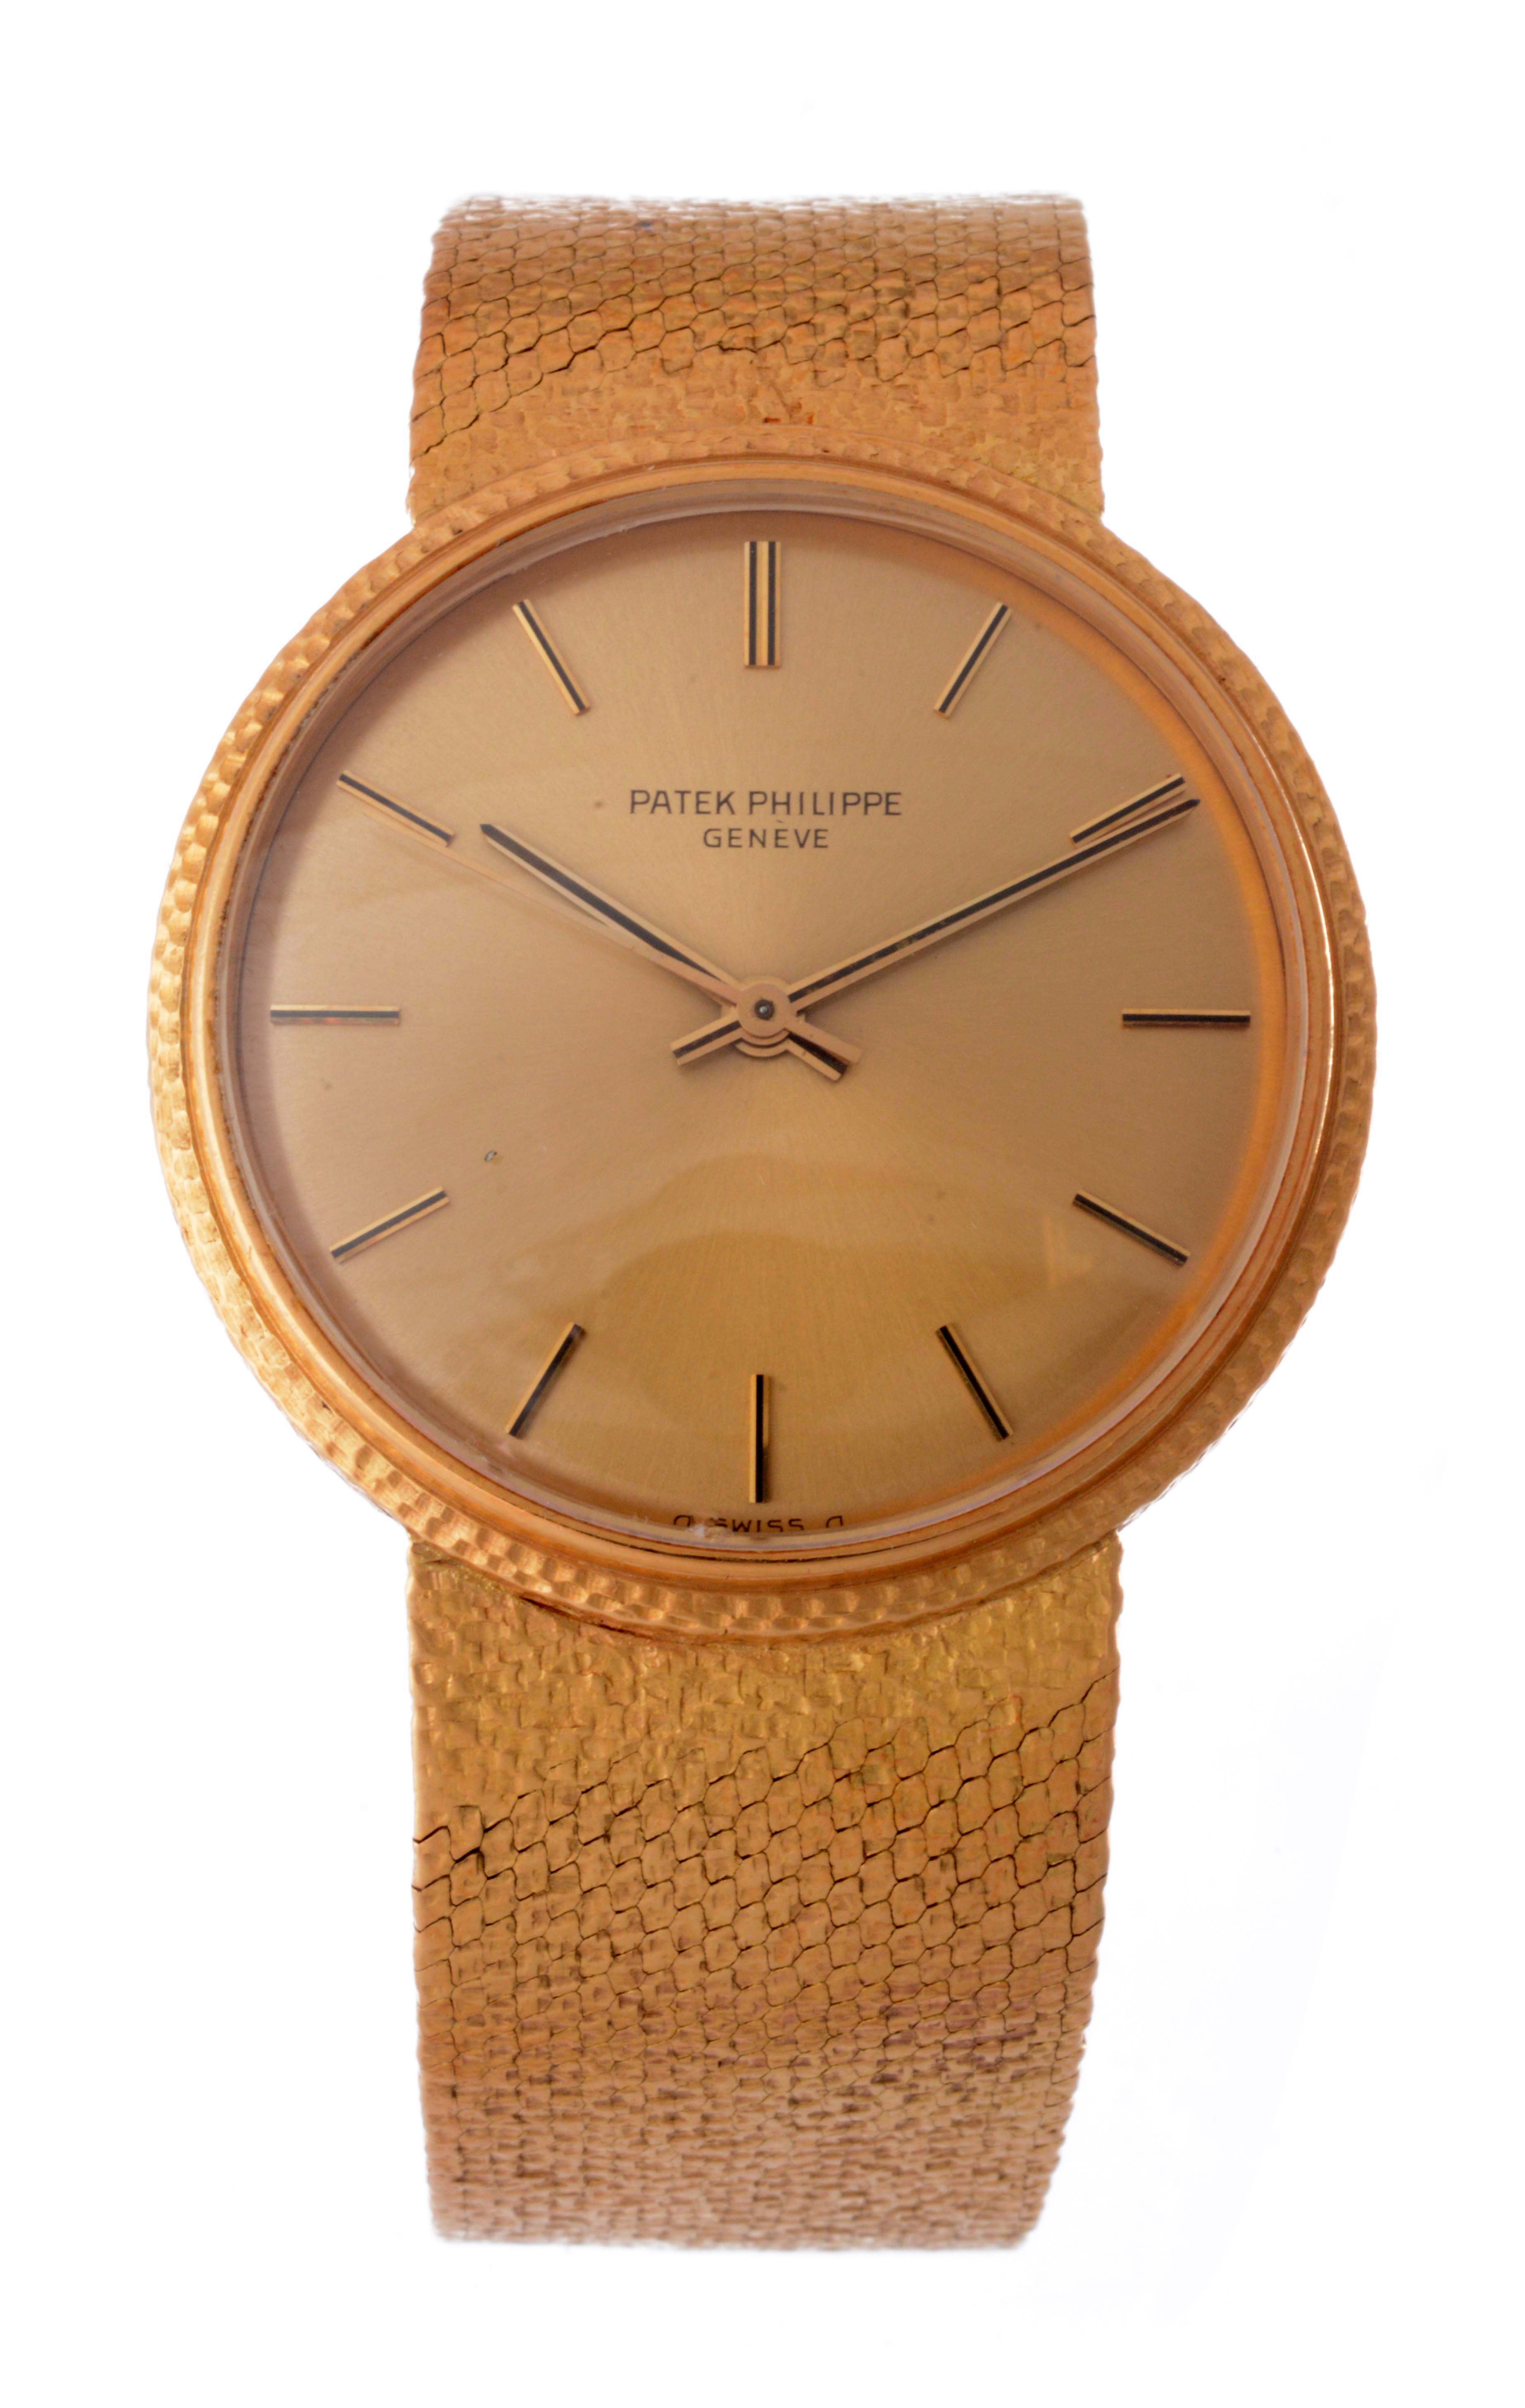 Patek Philippe 18k Wristwatch Model # 3563 2, estimated at $8,000-12,000.